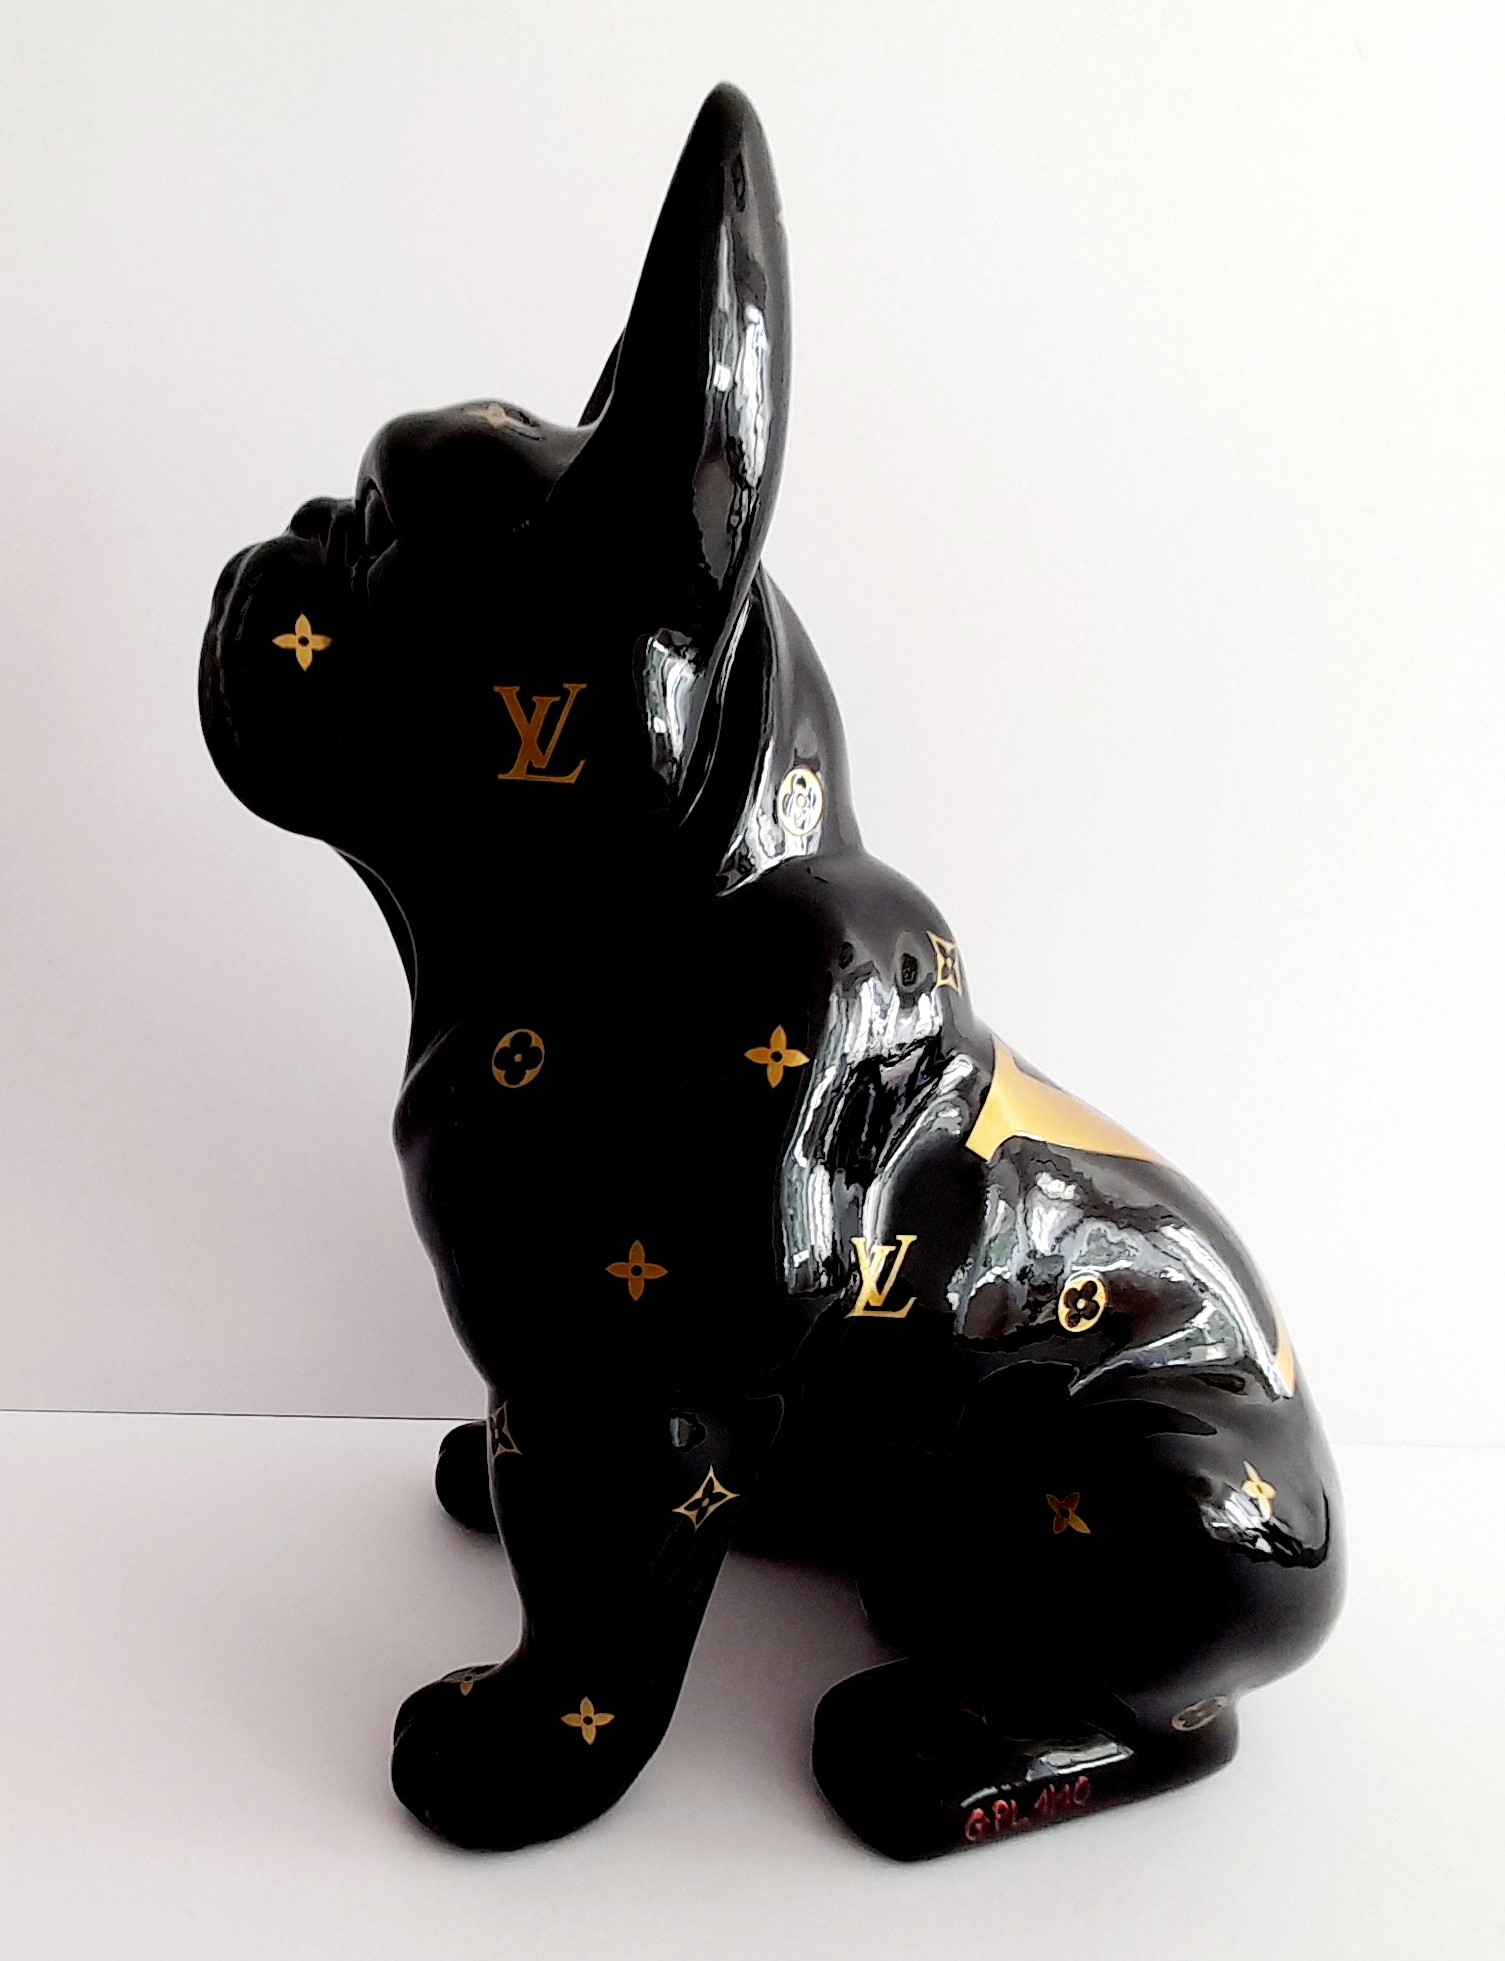 Patrick KONRAD - Louis Vuitton SUPREME Bulldog - Sculpture